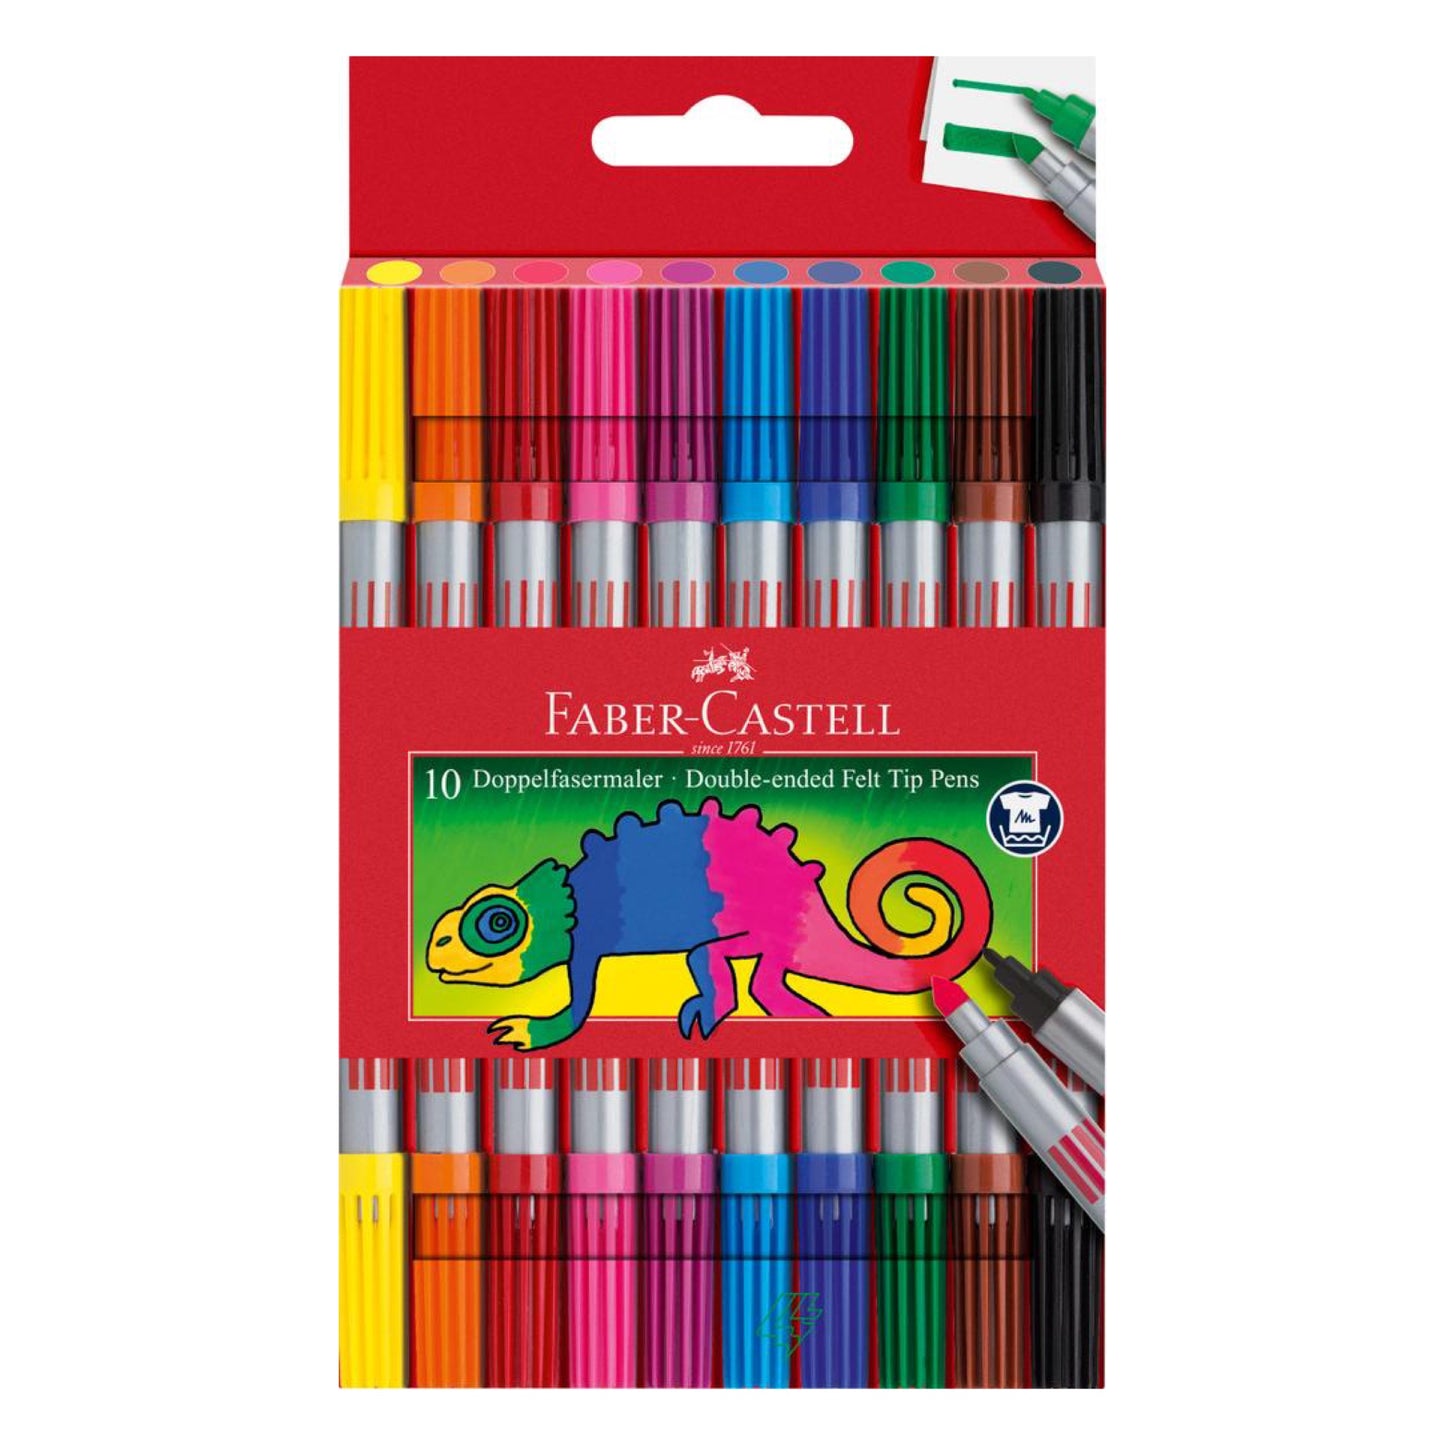 Faber Castell 10 Double Ended Felt Tip Pens || الوان شينية فيبر كاستل ١٠ لون براسين